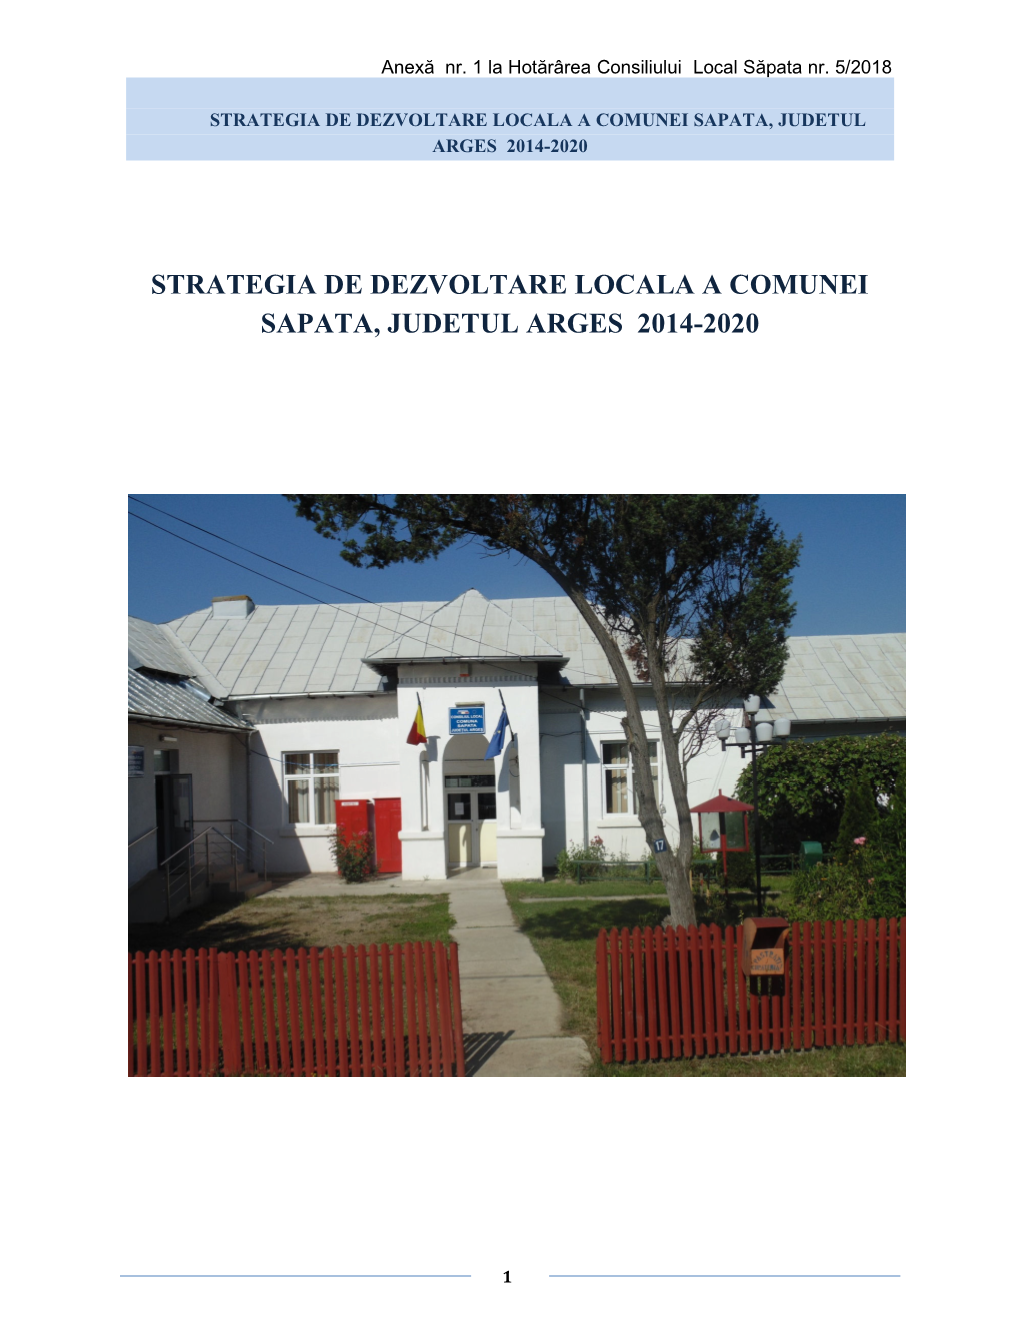 Strategia De Dezvoltare Locala a Comunei Sapata, Judetul Arges 2014-2020